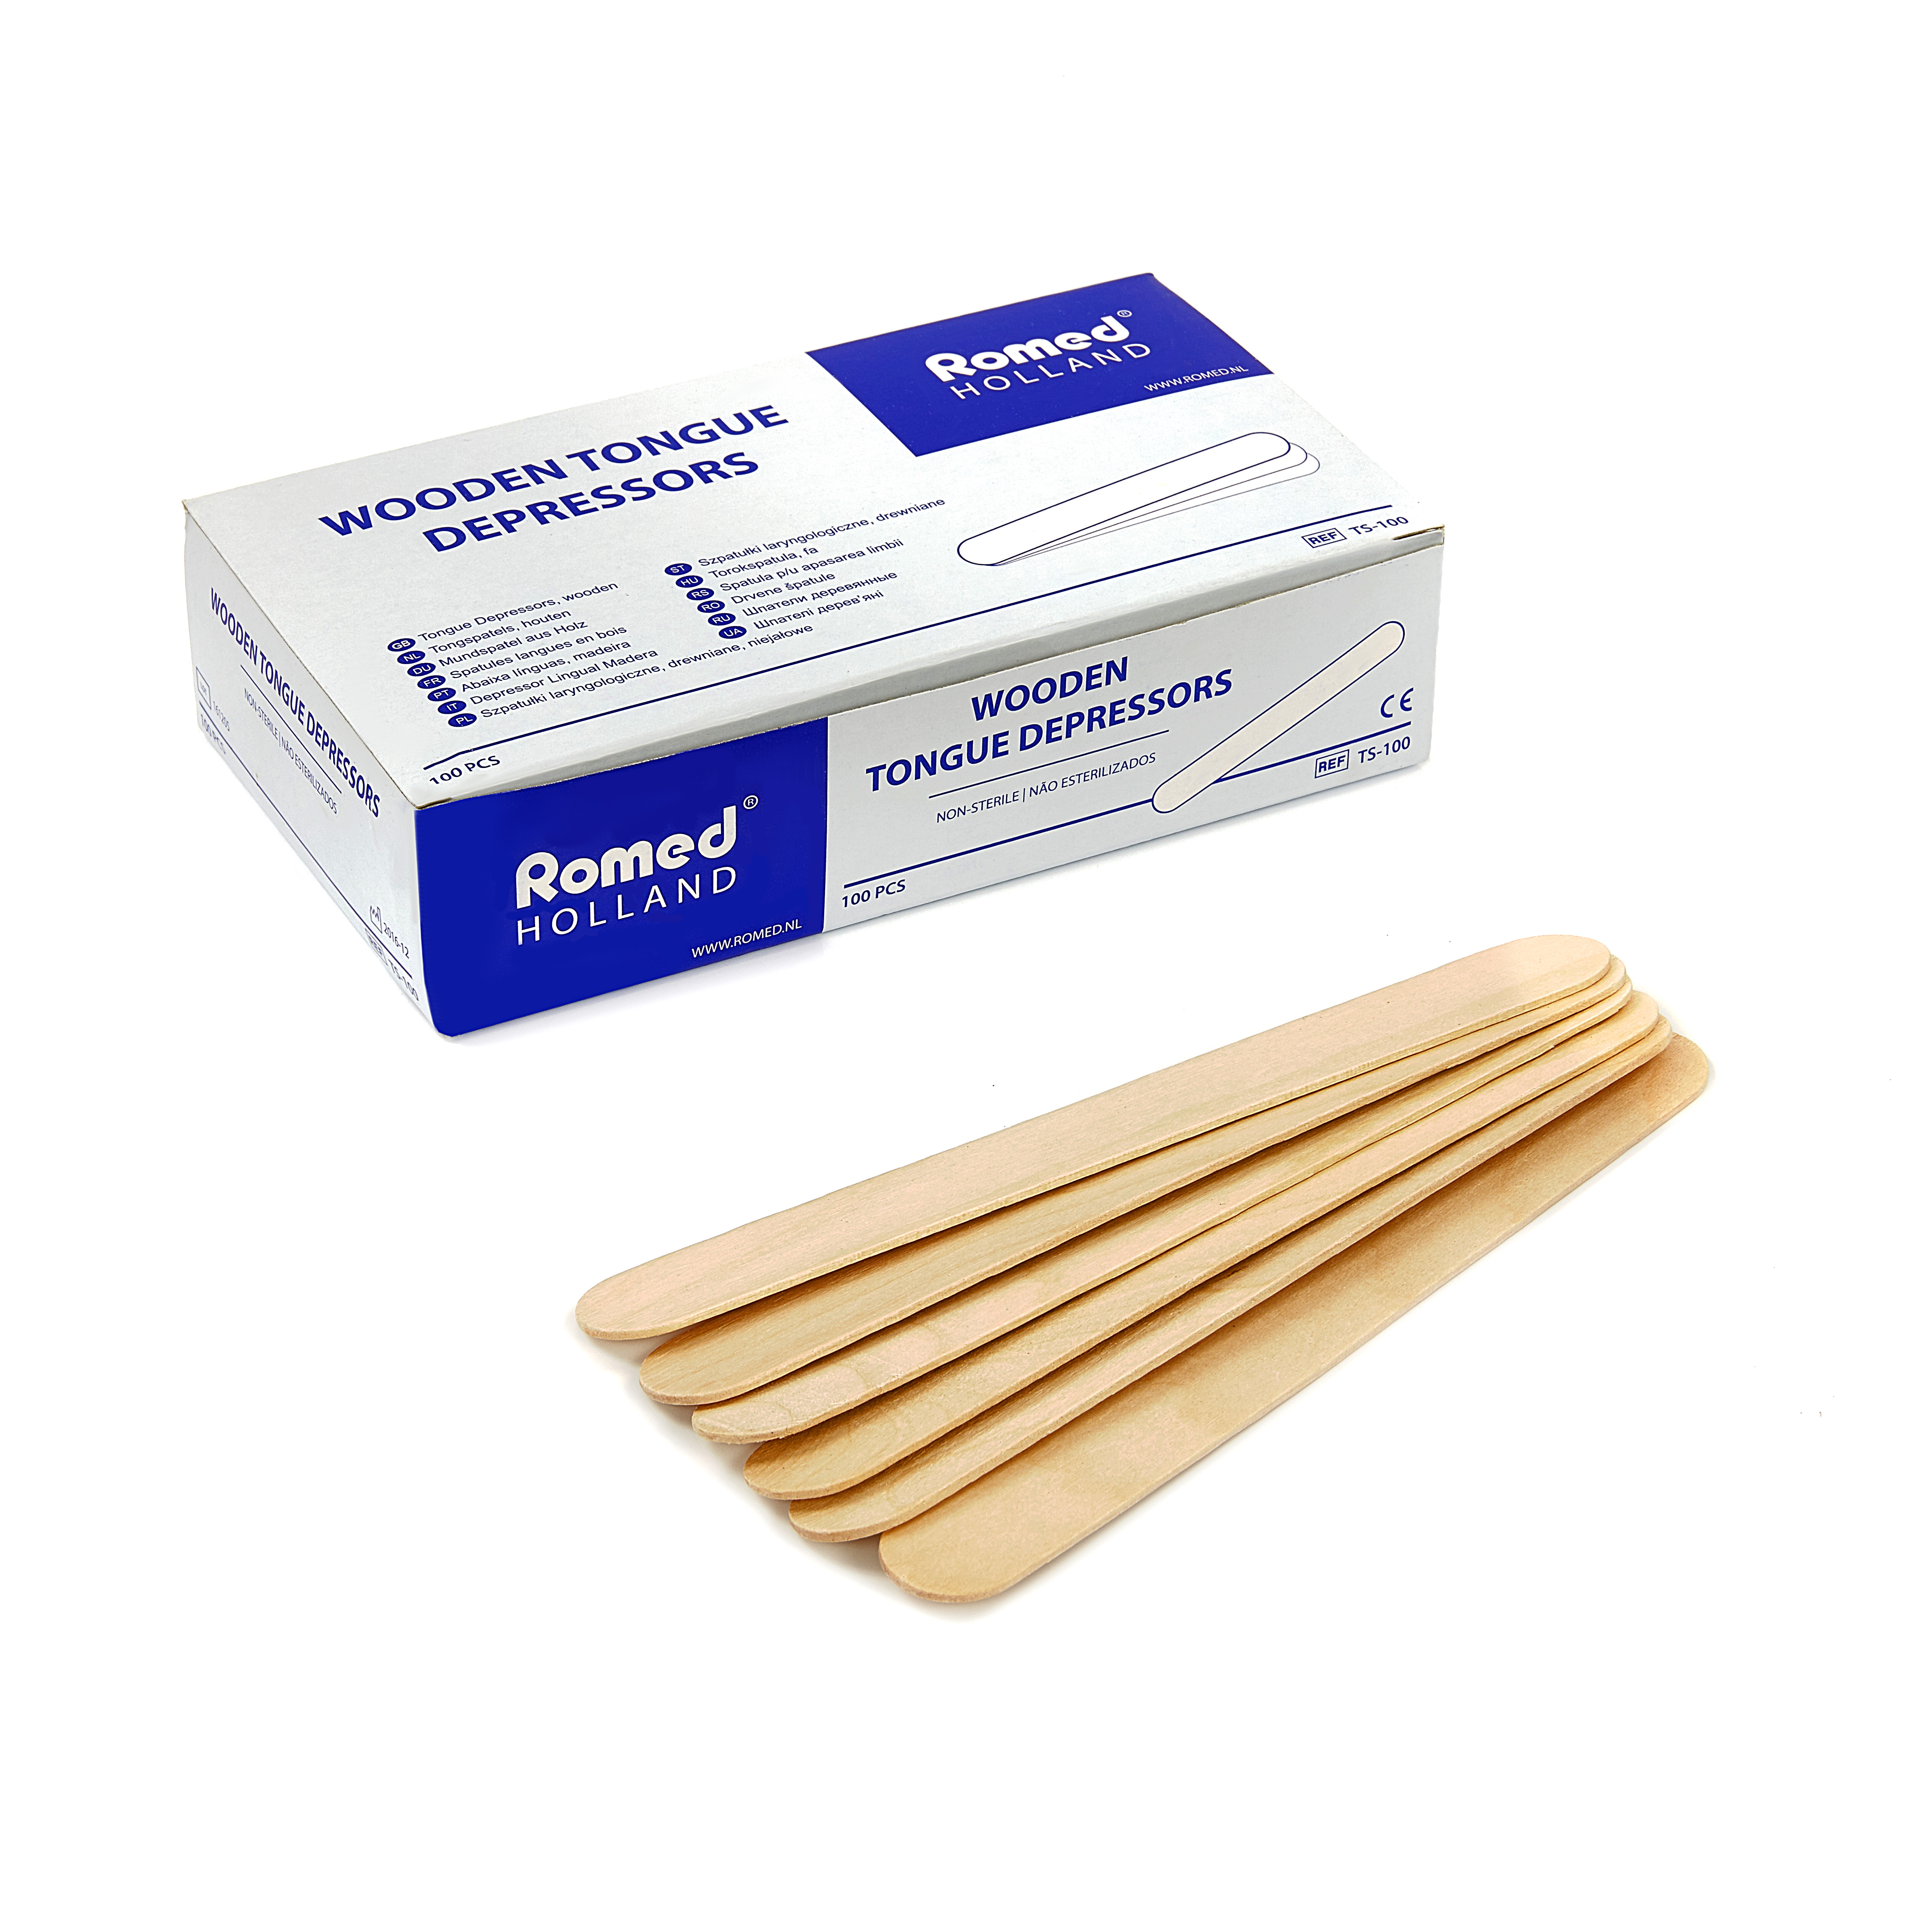 TS-100 Romed wooden tongue depressors, 100 pcs in an inner box, 50 x 100 pcs = 5.000 pcs in a carton.